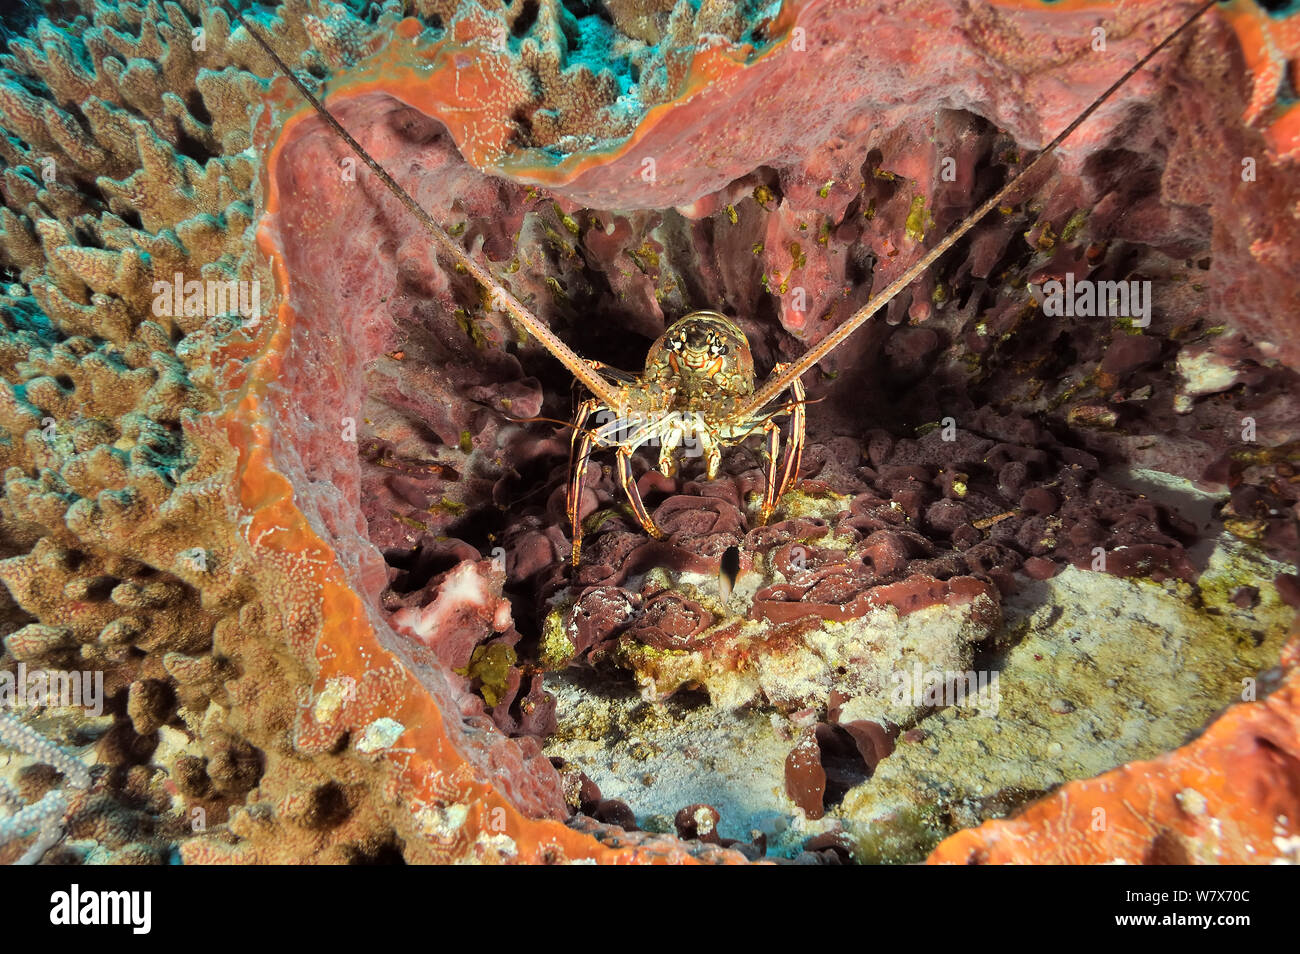 Karibik rote Languste (Panulirus argus) in ein riesiges Fass Schwamm (Xestospongia muta), San Salvador Island/Colombus Island, Bahamas. Karibik. Stockfoto